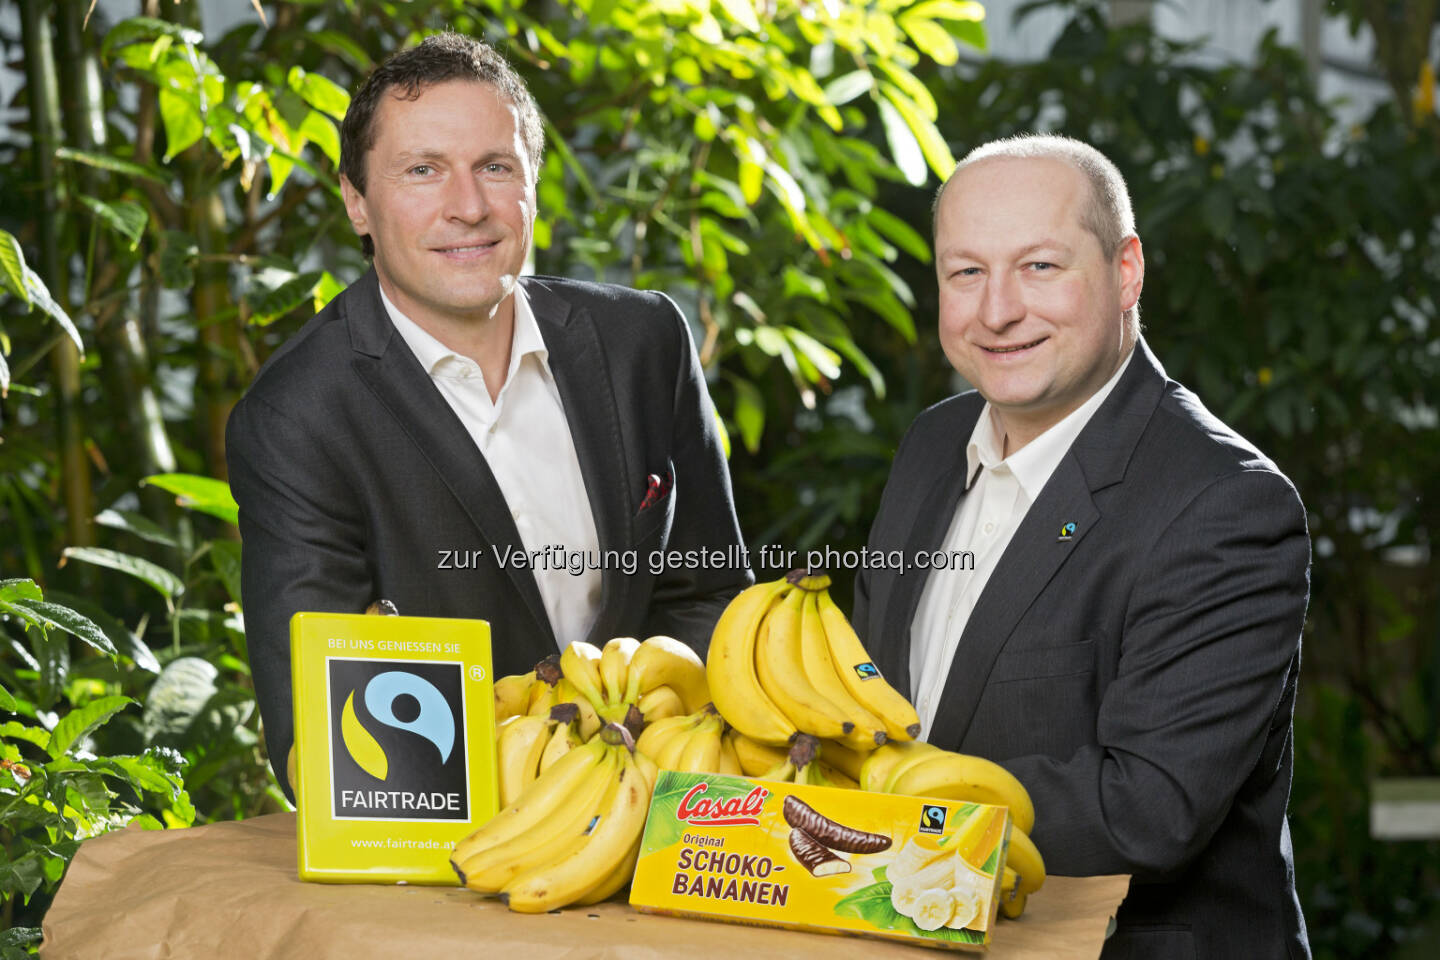 Ulf Schöttl, Marketingleiter Manner und Hartwig Kirner, GF Fairtrade: Josef Manner & Comp. AG: Casali-Schoko-Bananen ab sofort Fairtrade zertifiziert